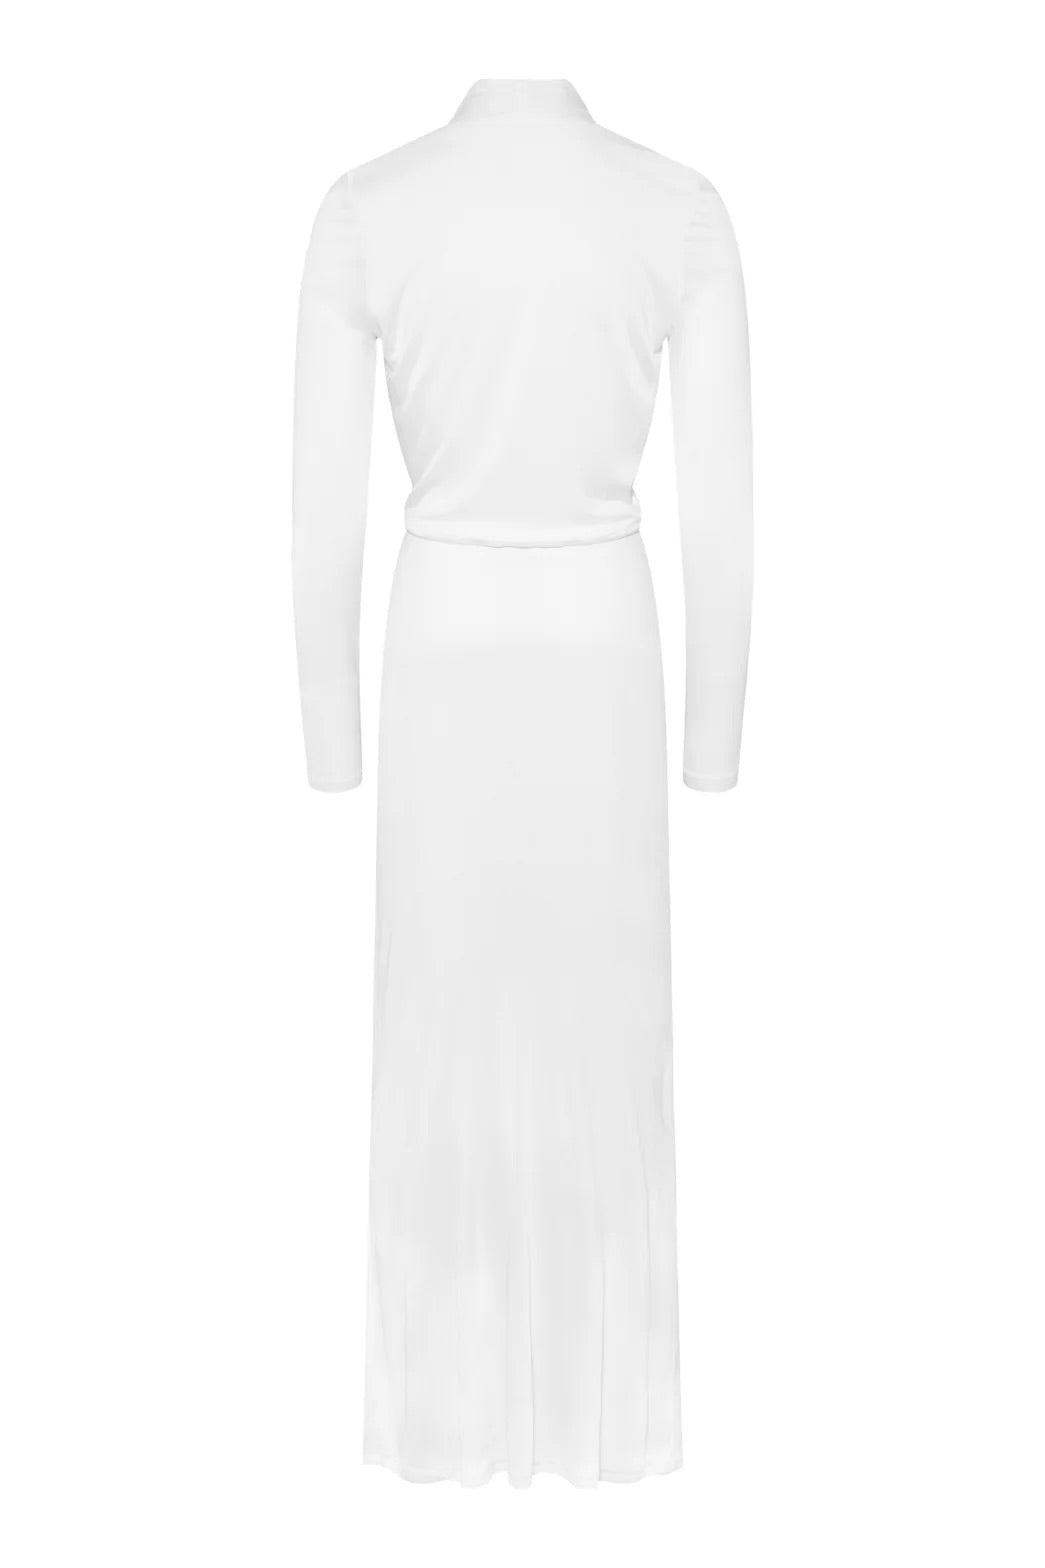 ENVELOPE 1976 - Opening Dress White - Dale